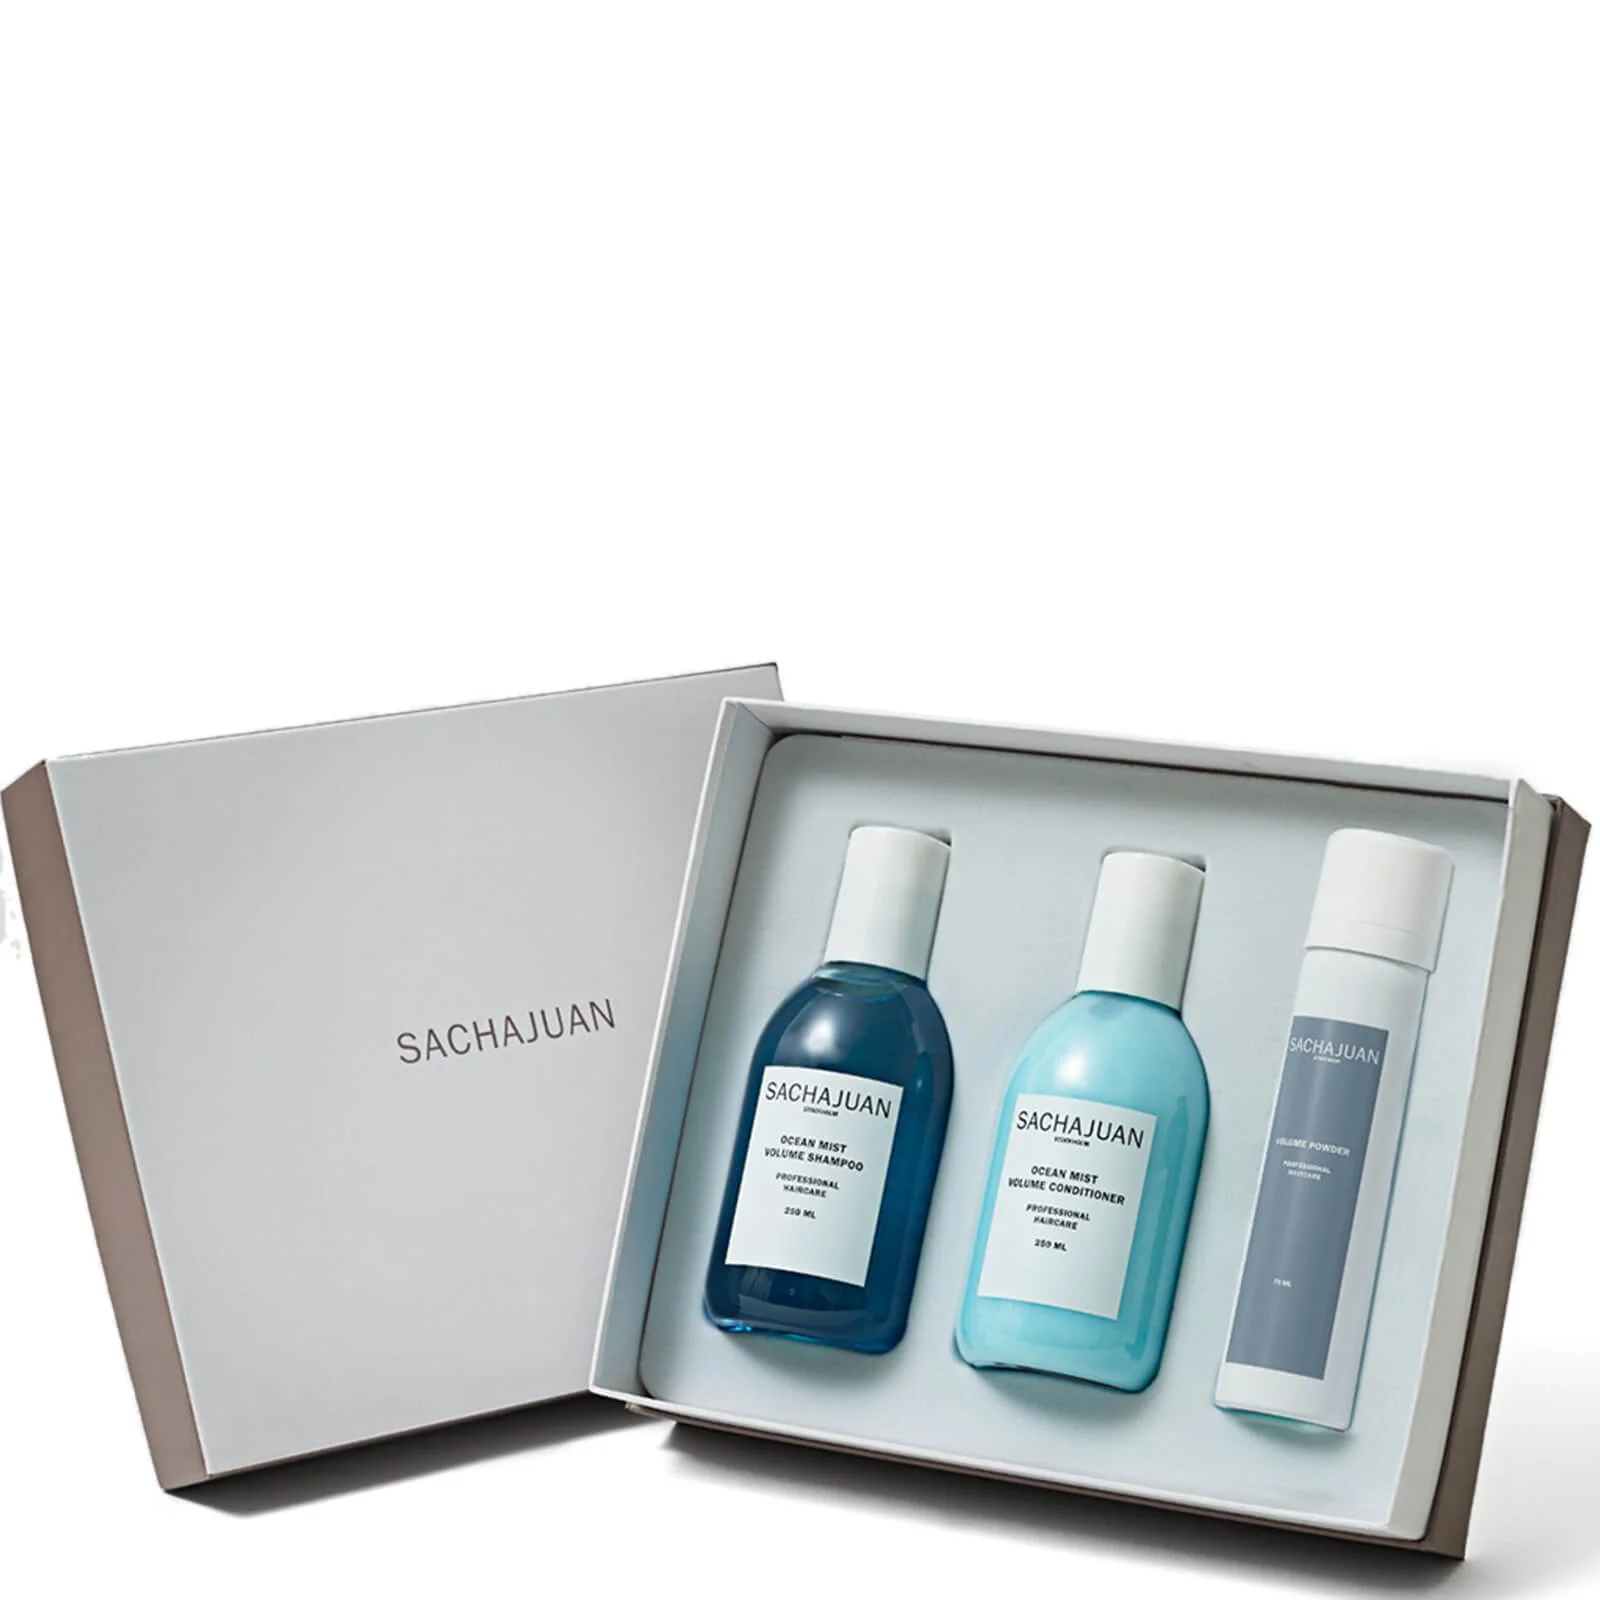 Sachajuan Ocean Mist Hair Gift Box (Worth £56.00) Image 1